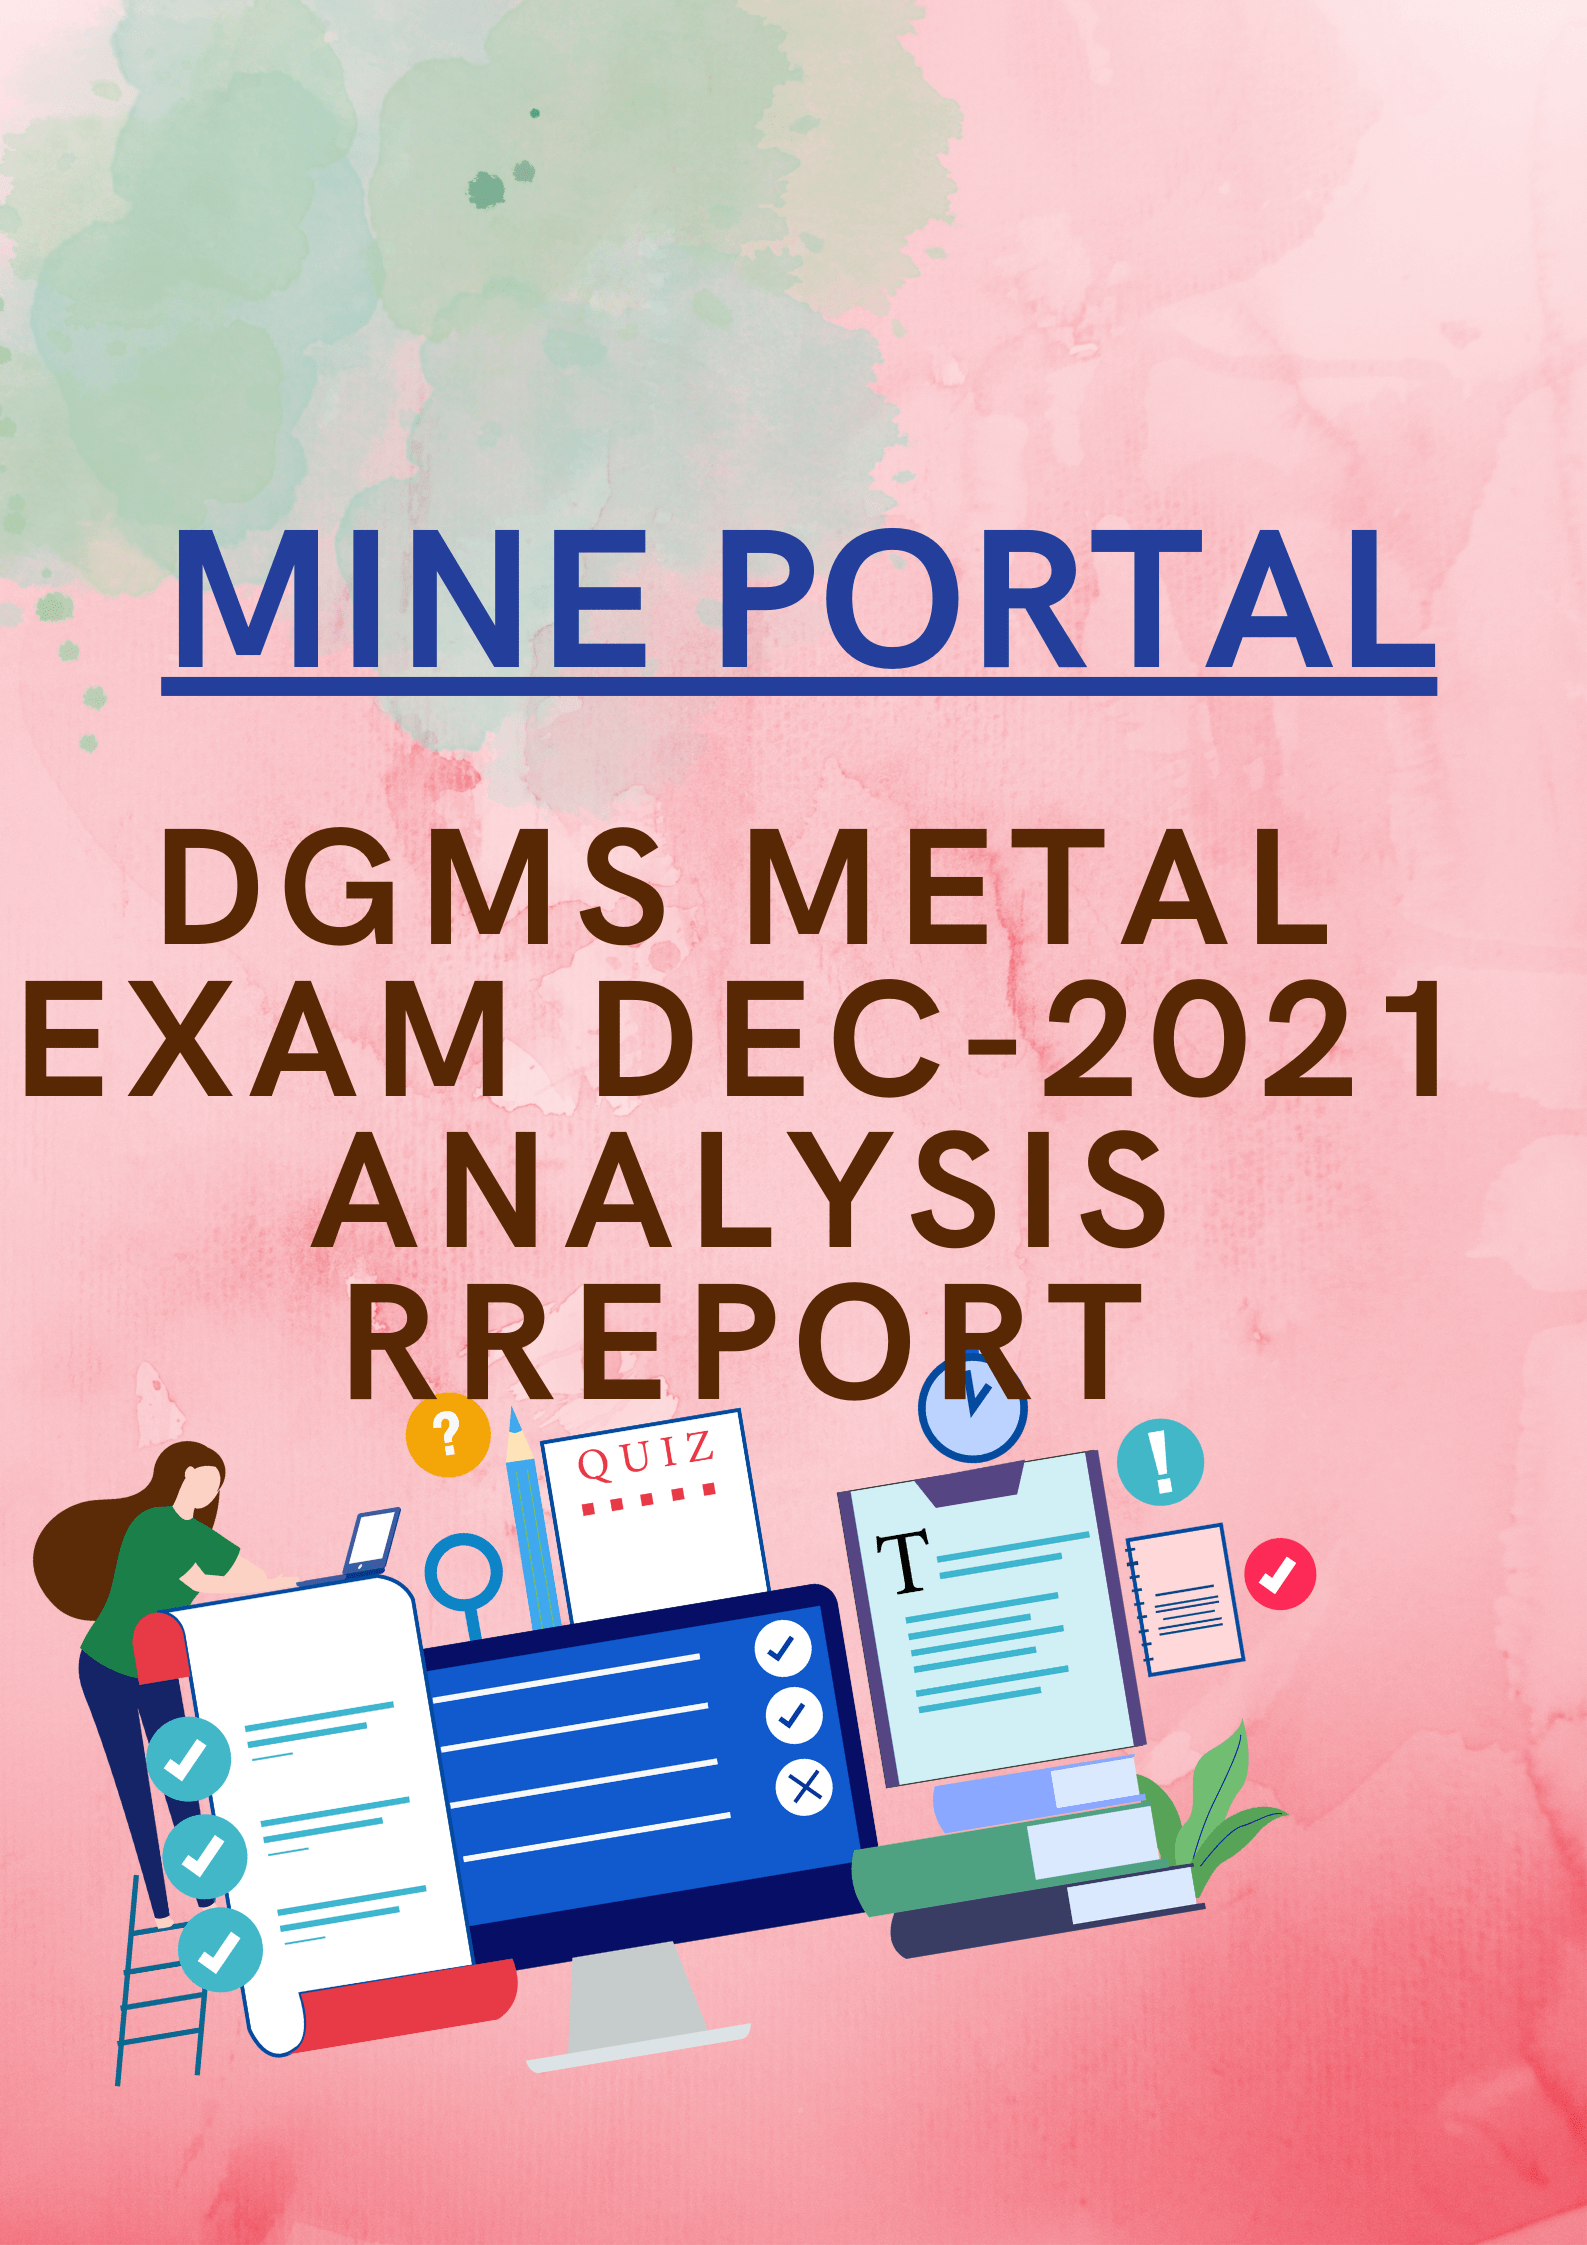 METAL FIRST CLASS MMLGS DEC-2021 EXAM ANALYSIS REPORT